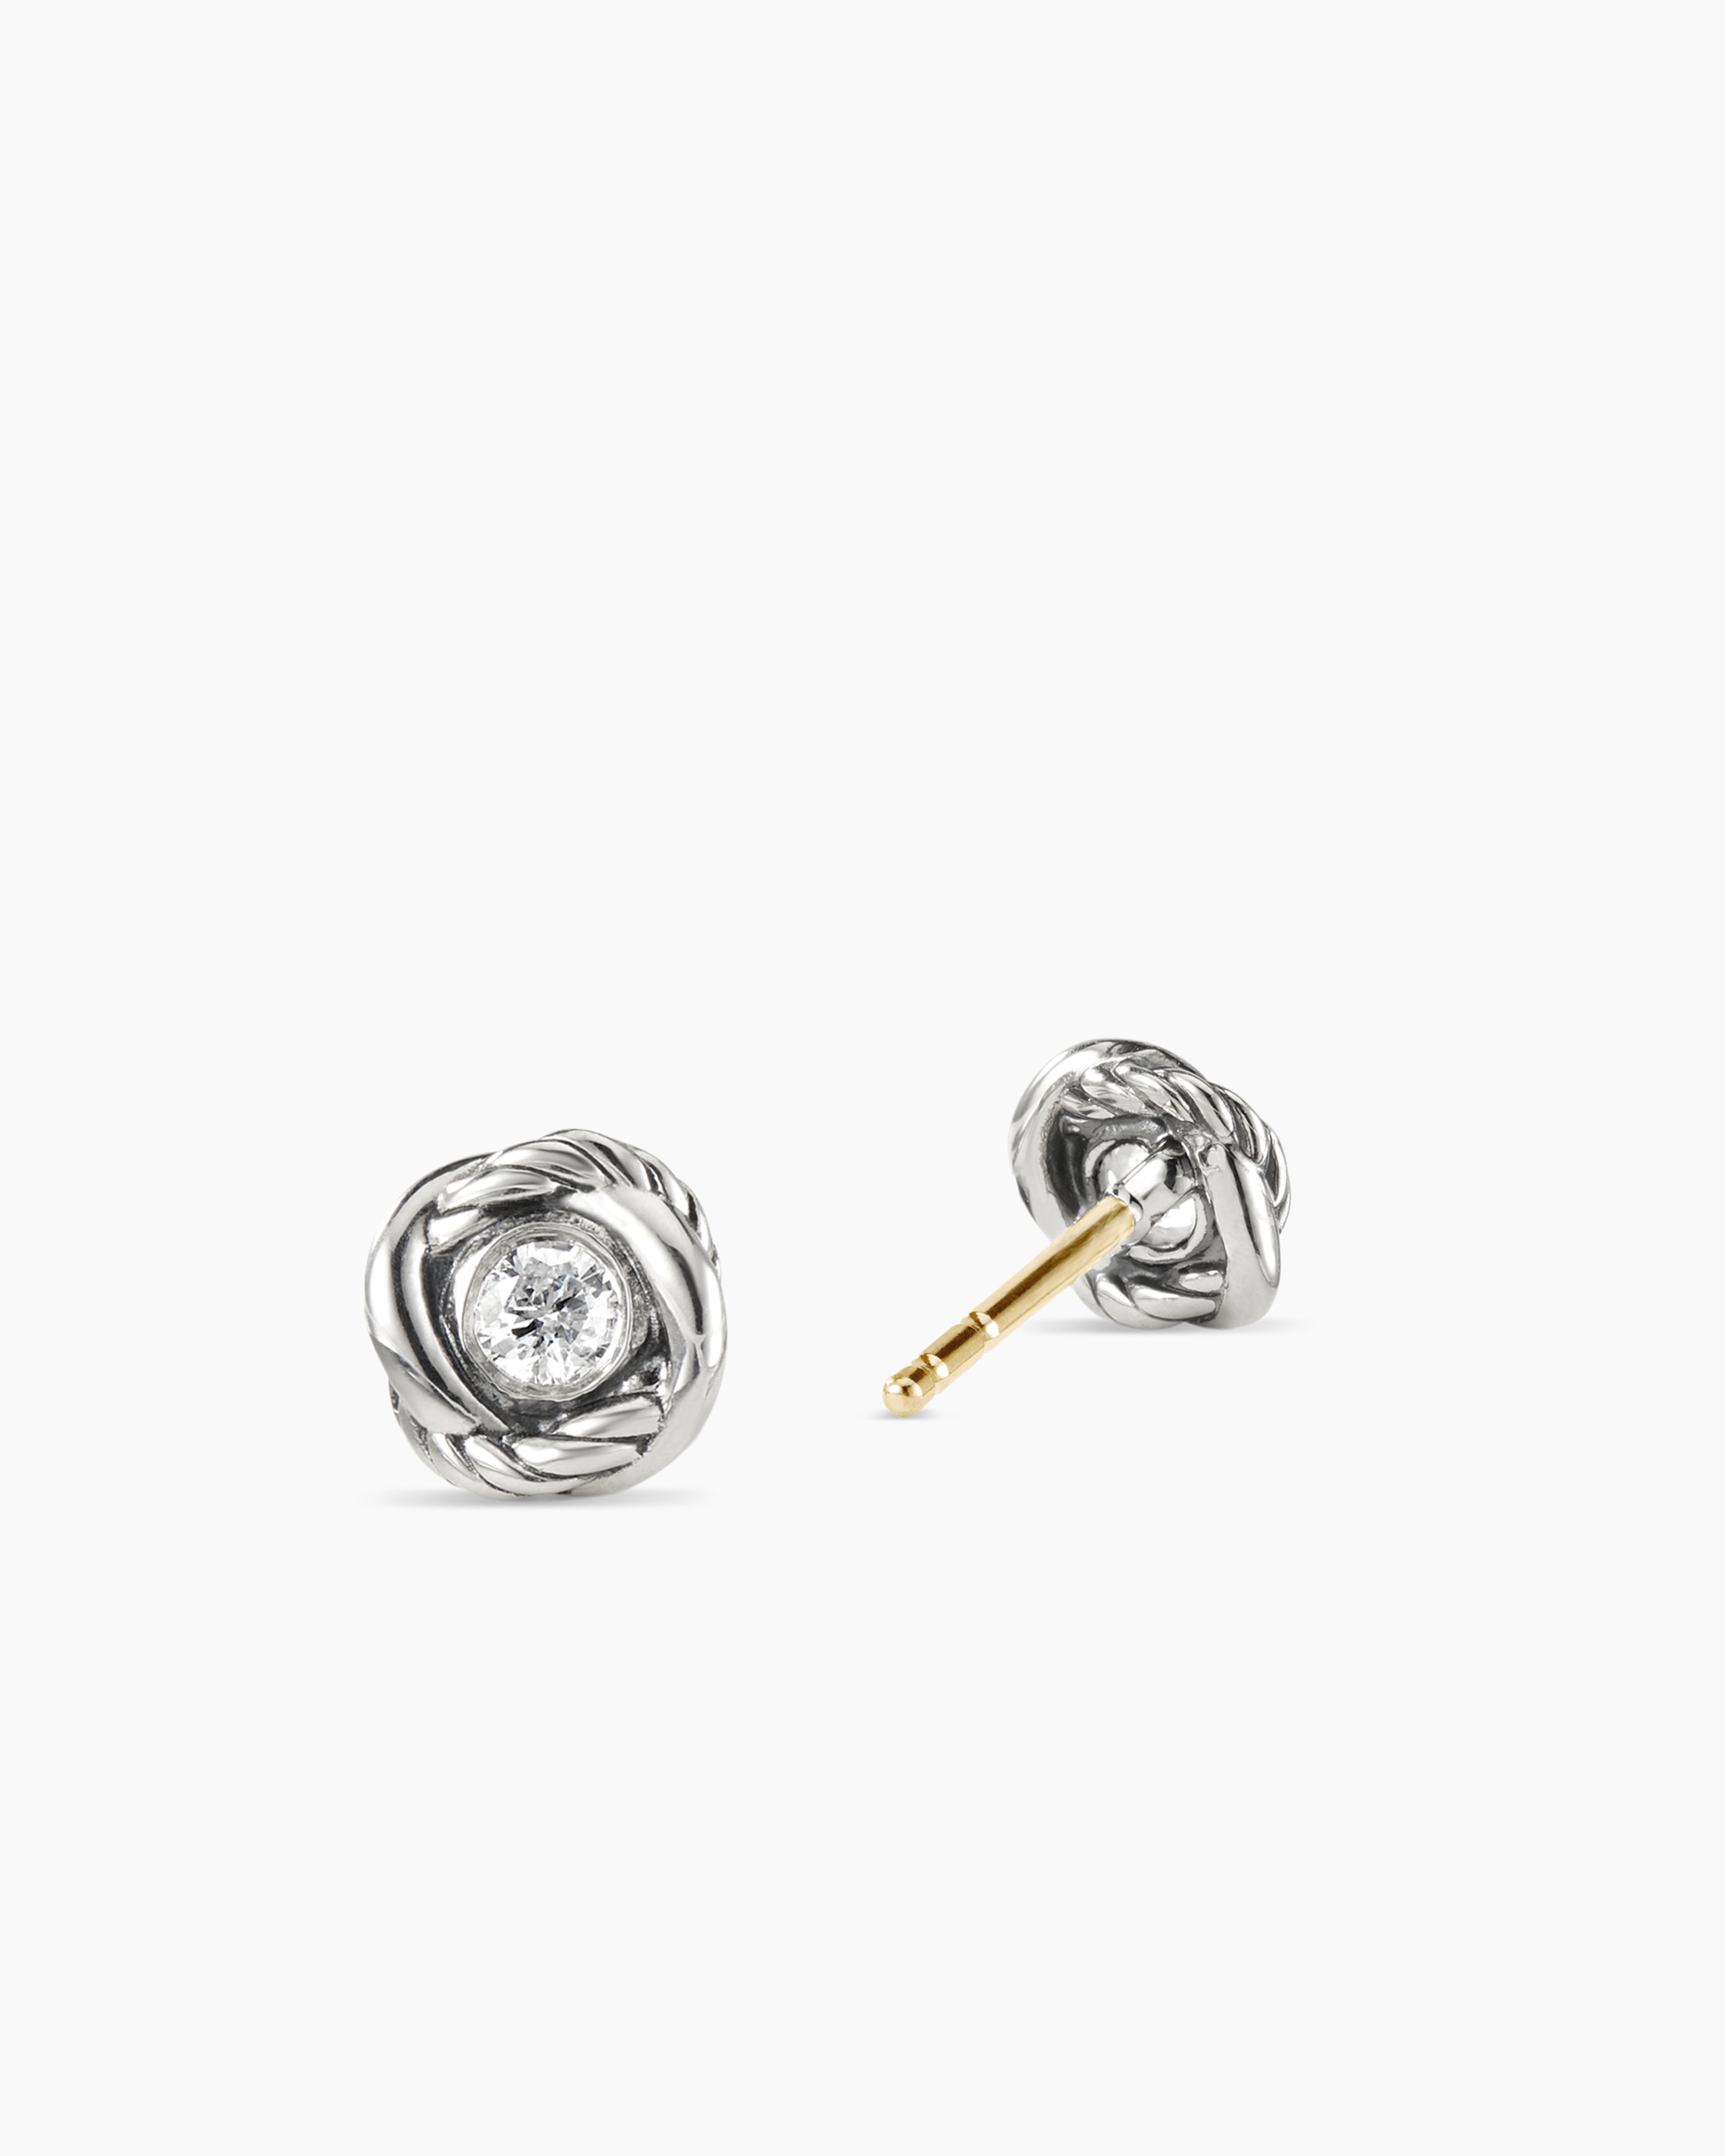 Infinity Earrings | Sydney Rosen